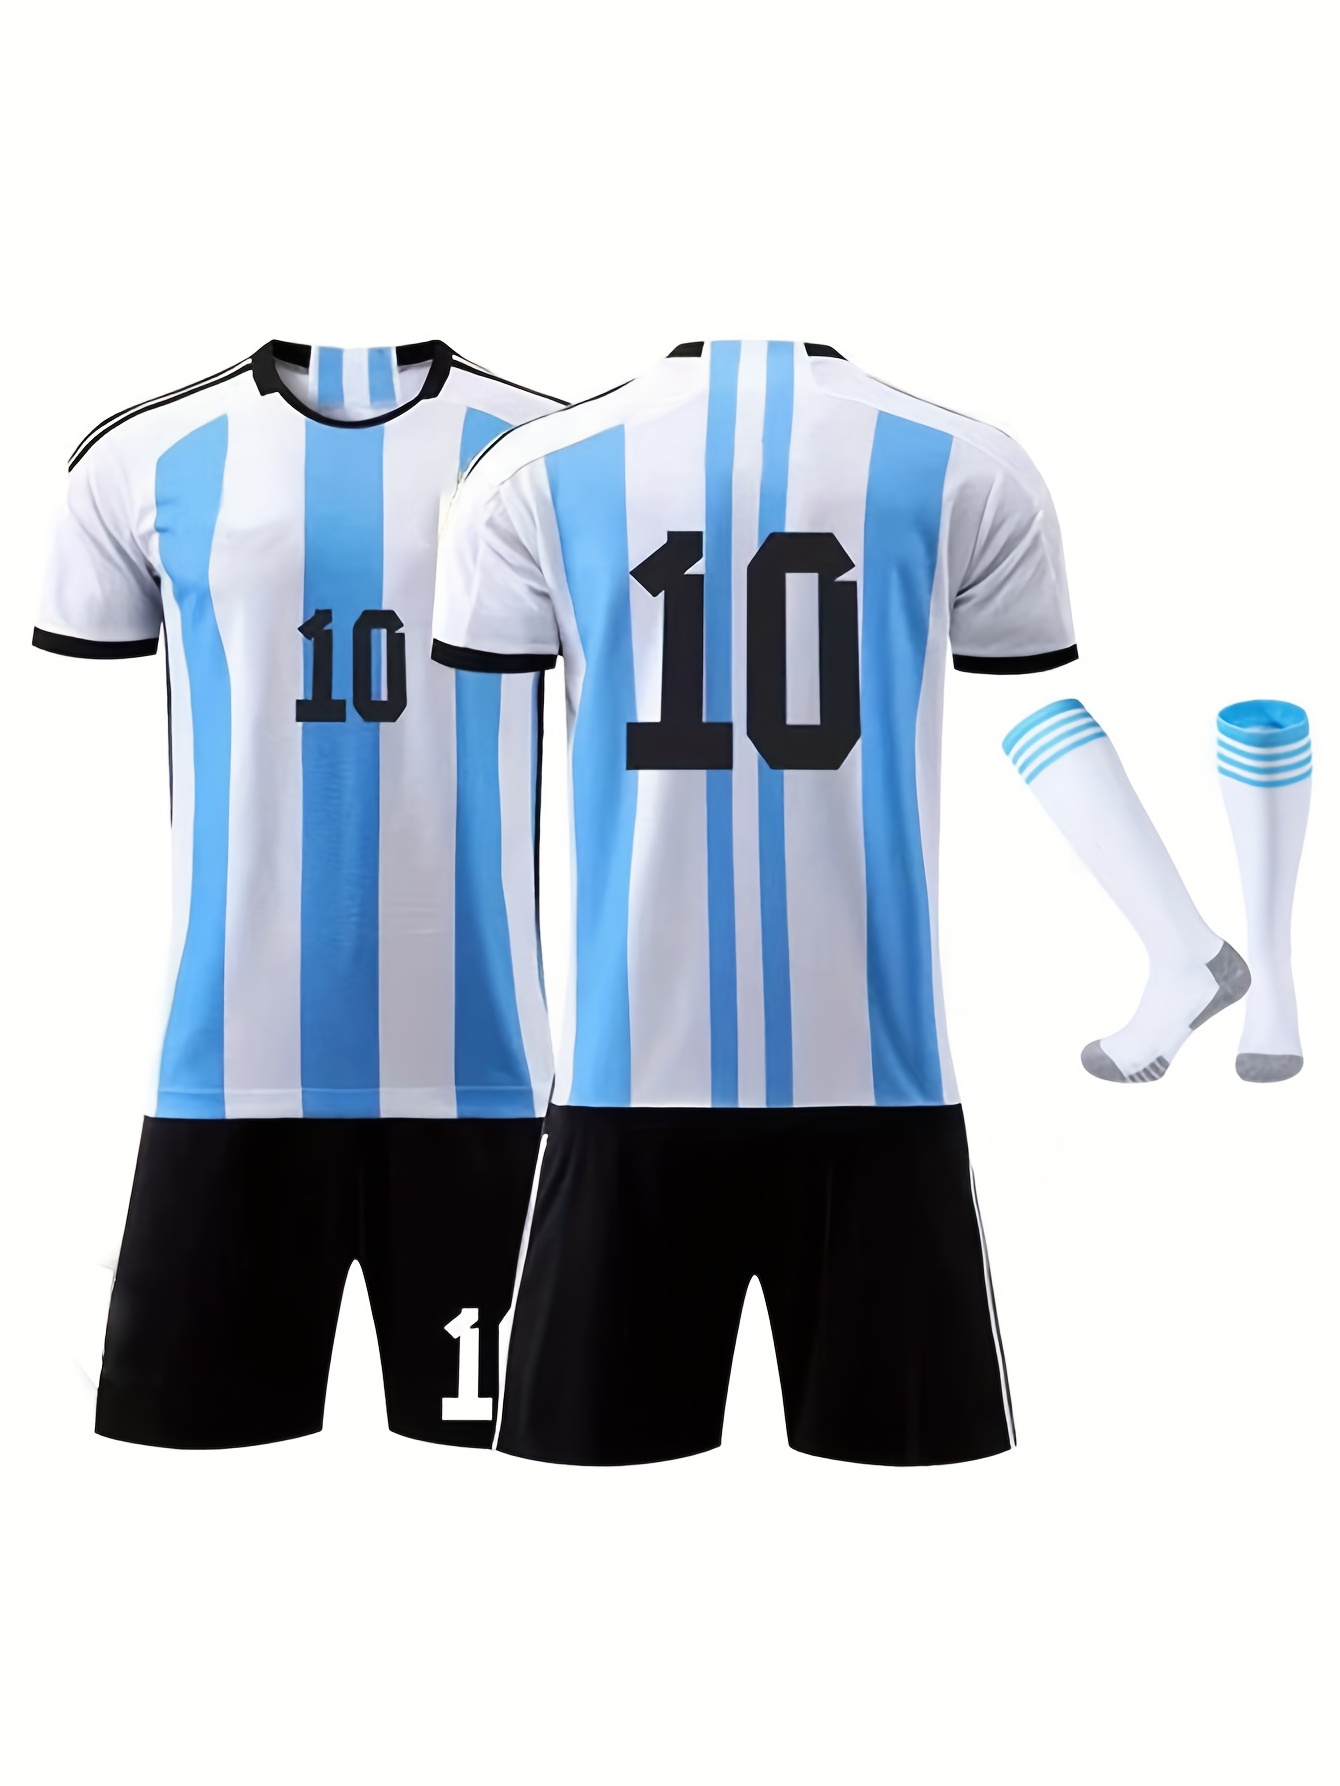 New Kids Football Kits Boys Soccer Set Jersey Uniforms Customize